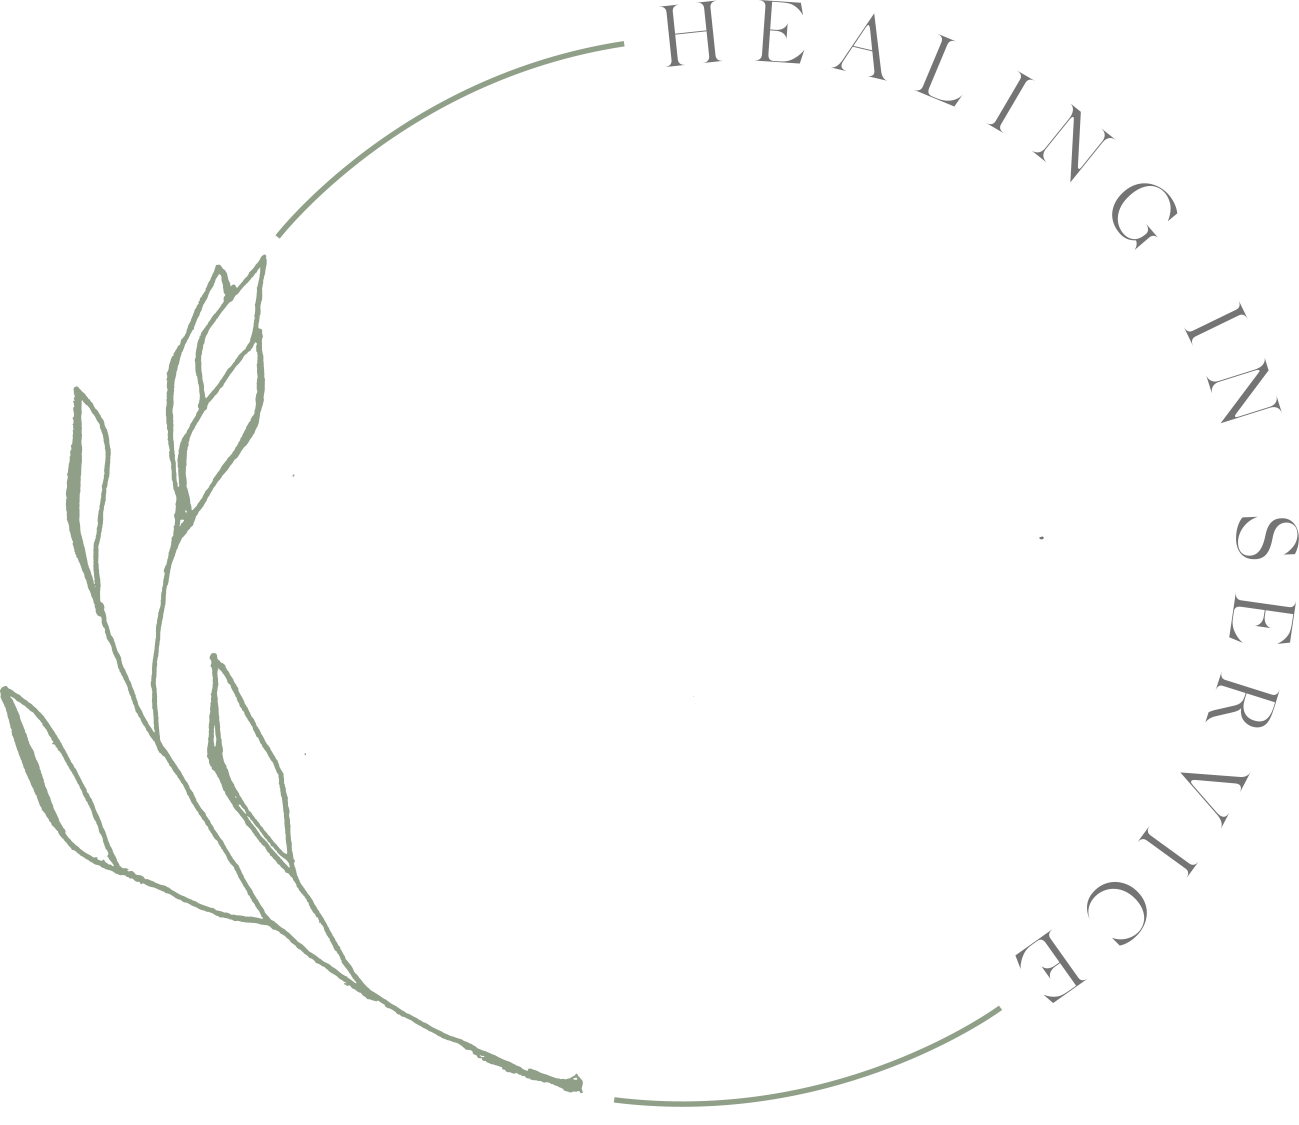 Healing in Service